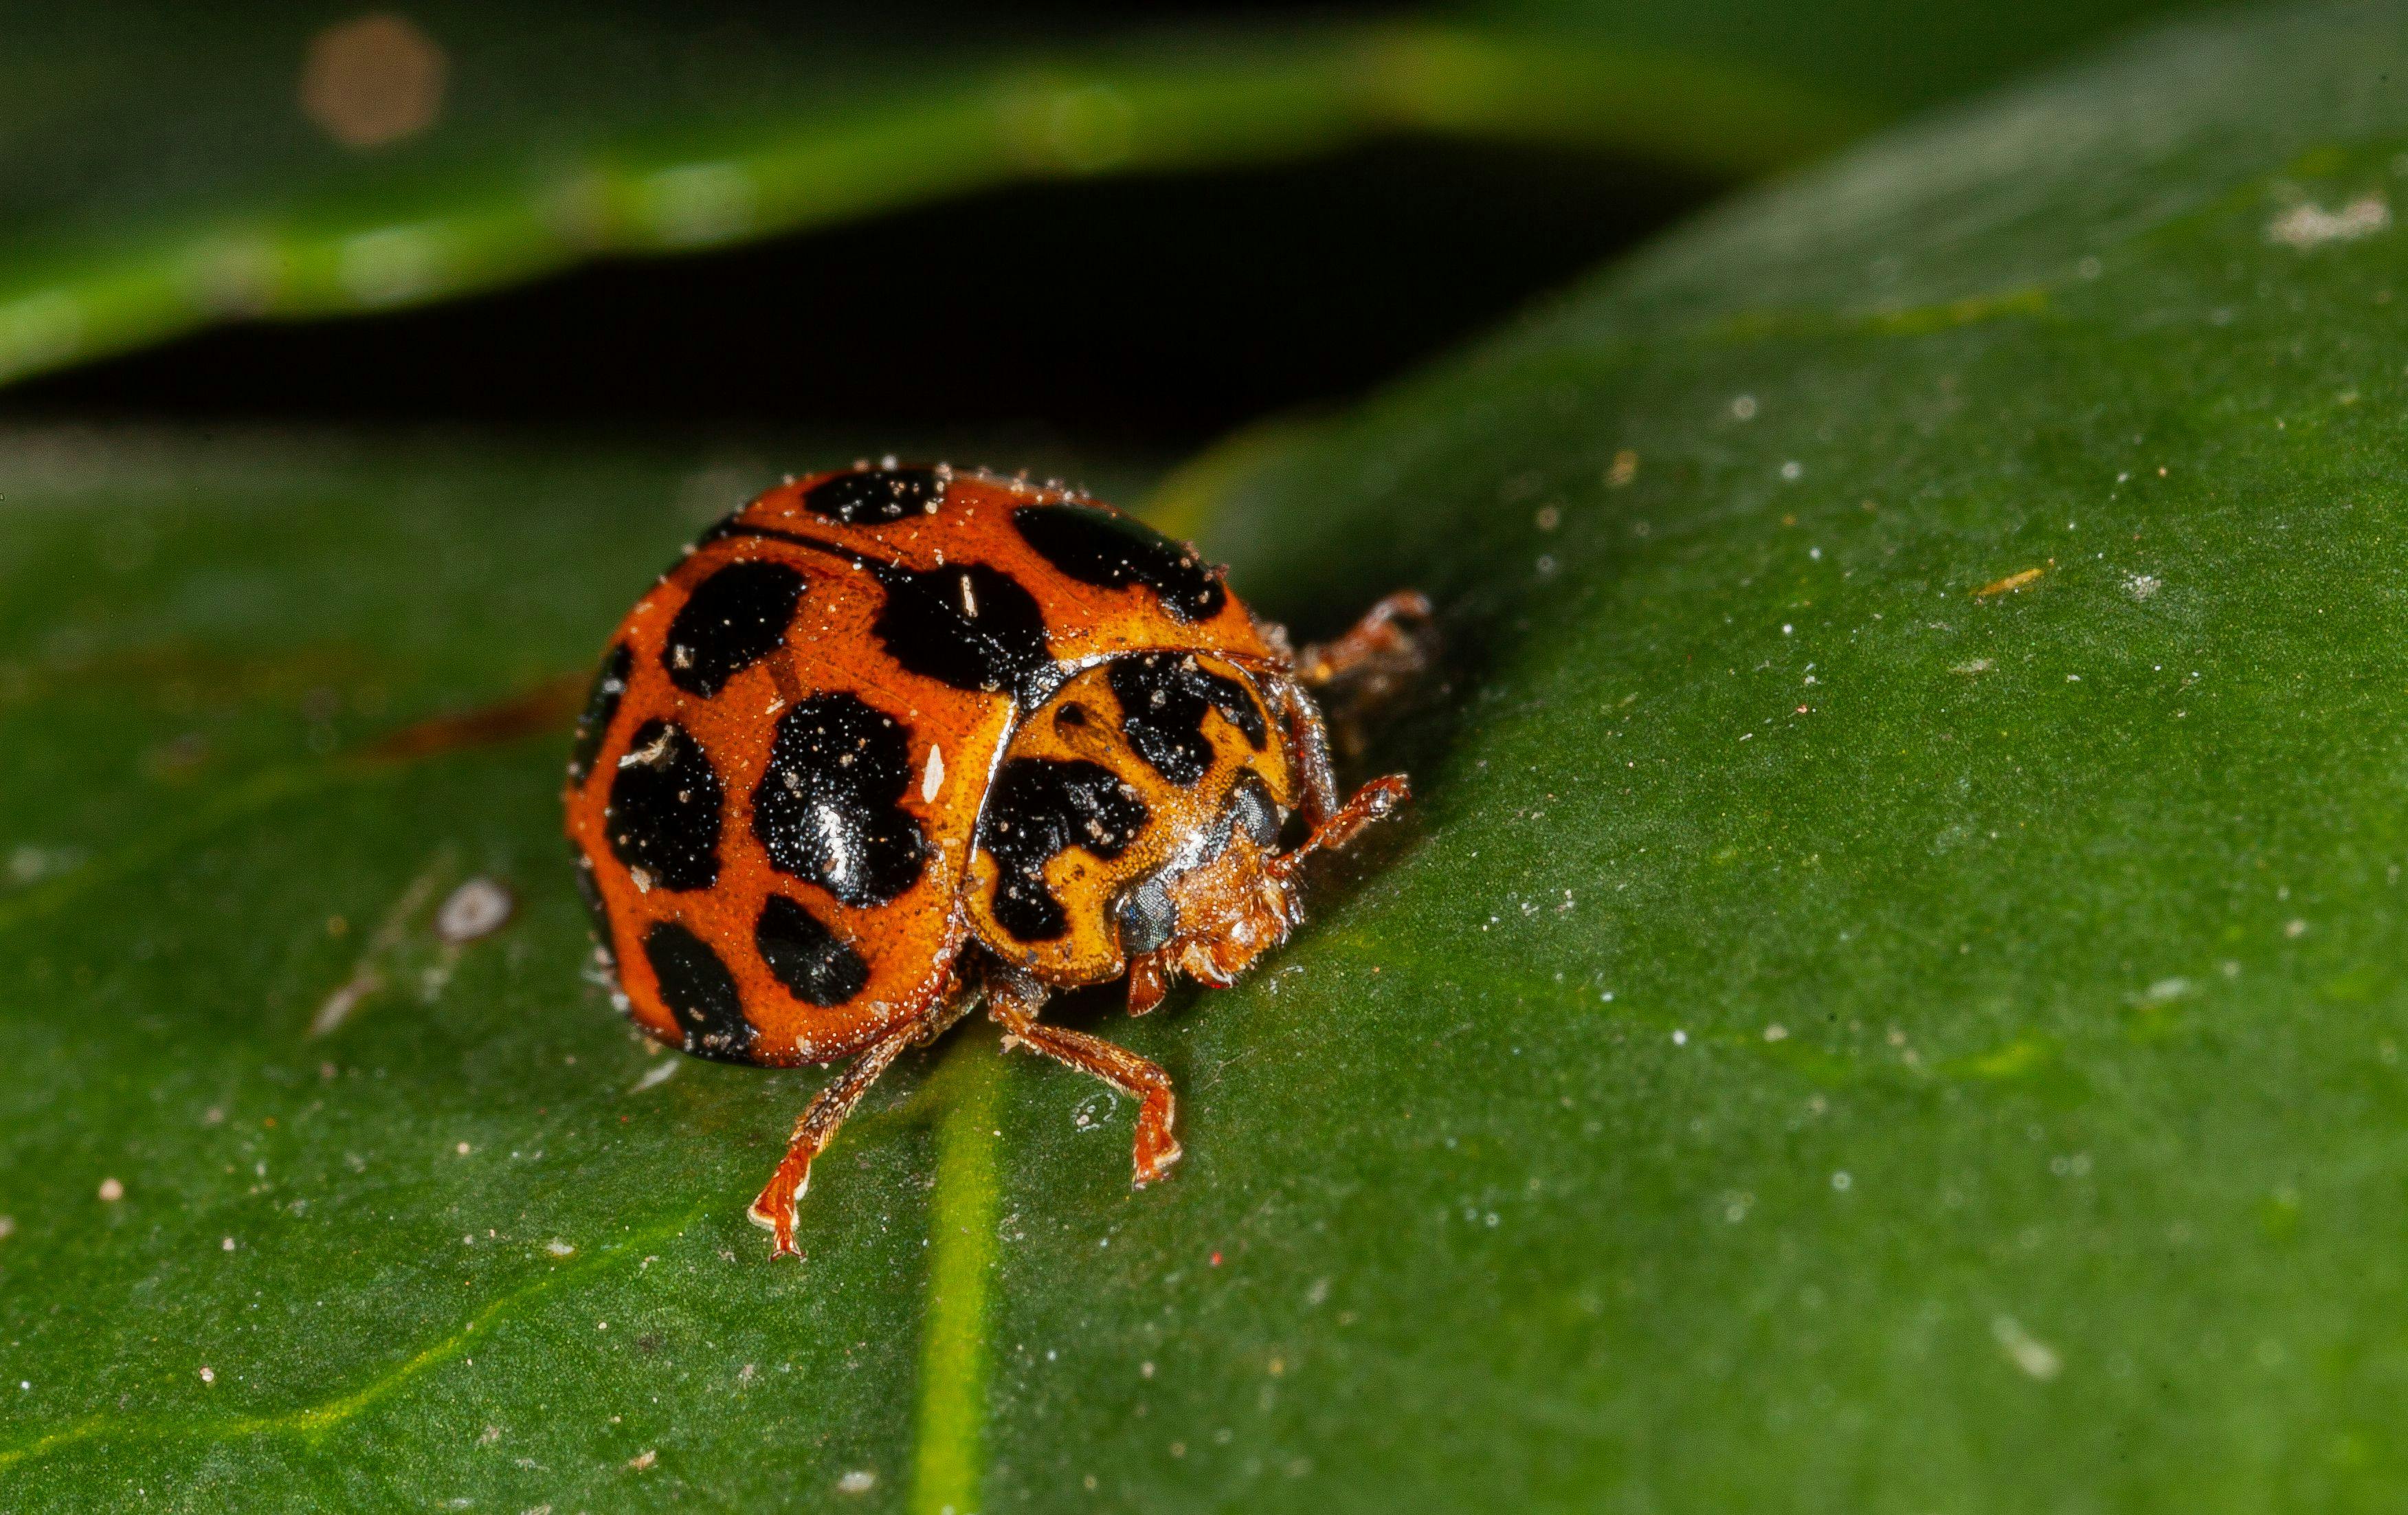 Ladybird beetles